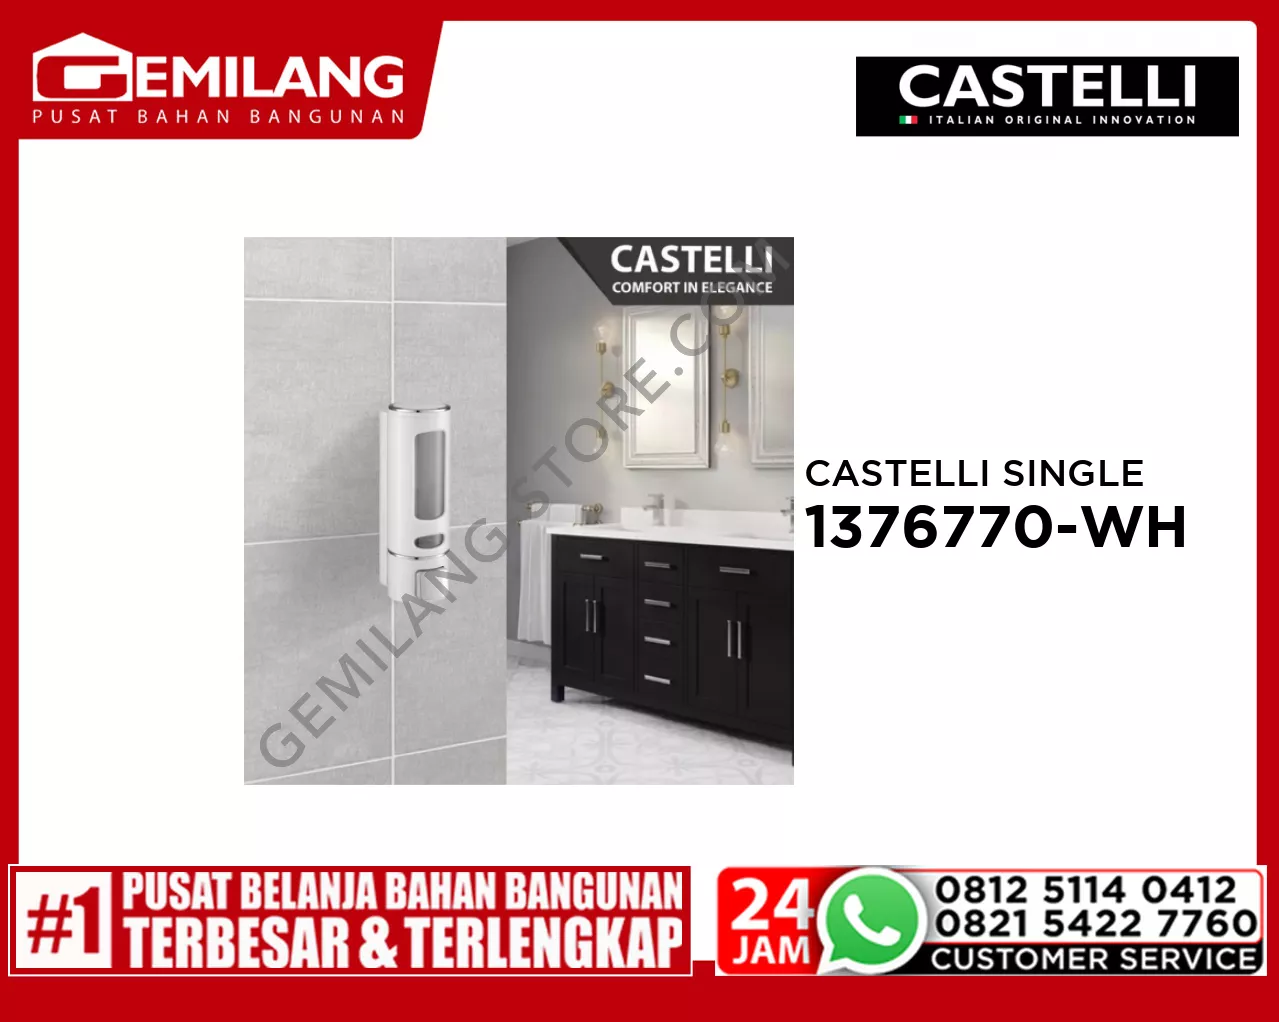 CASTELLI SINGLE SOAP DISPENSER WHITE 1376770-WH